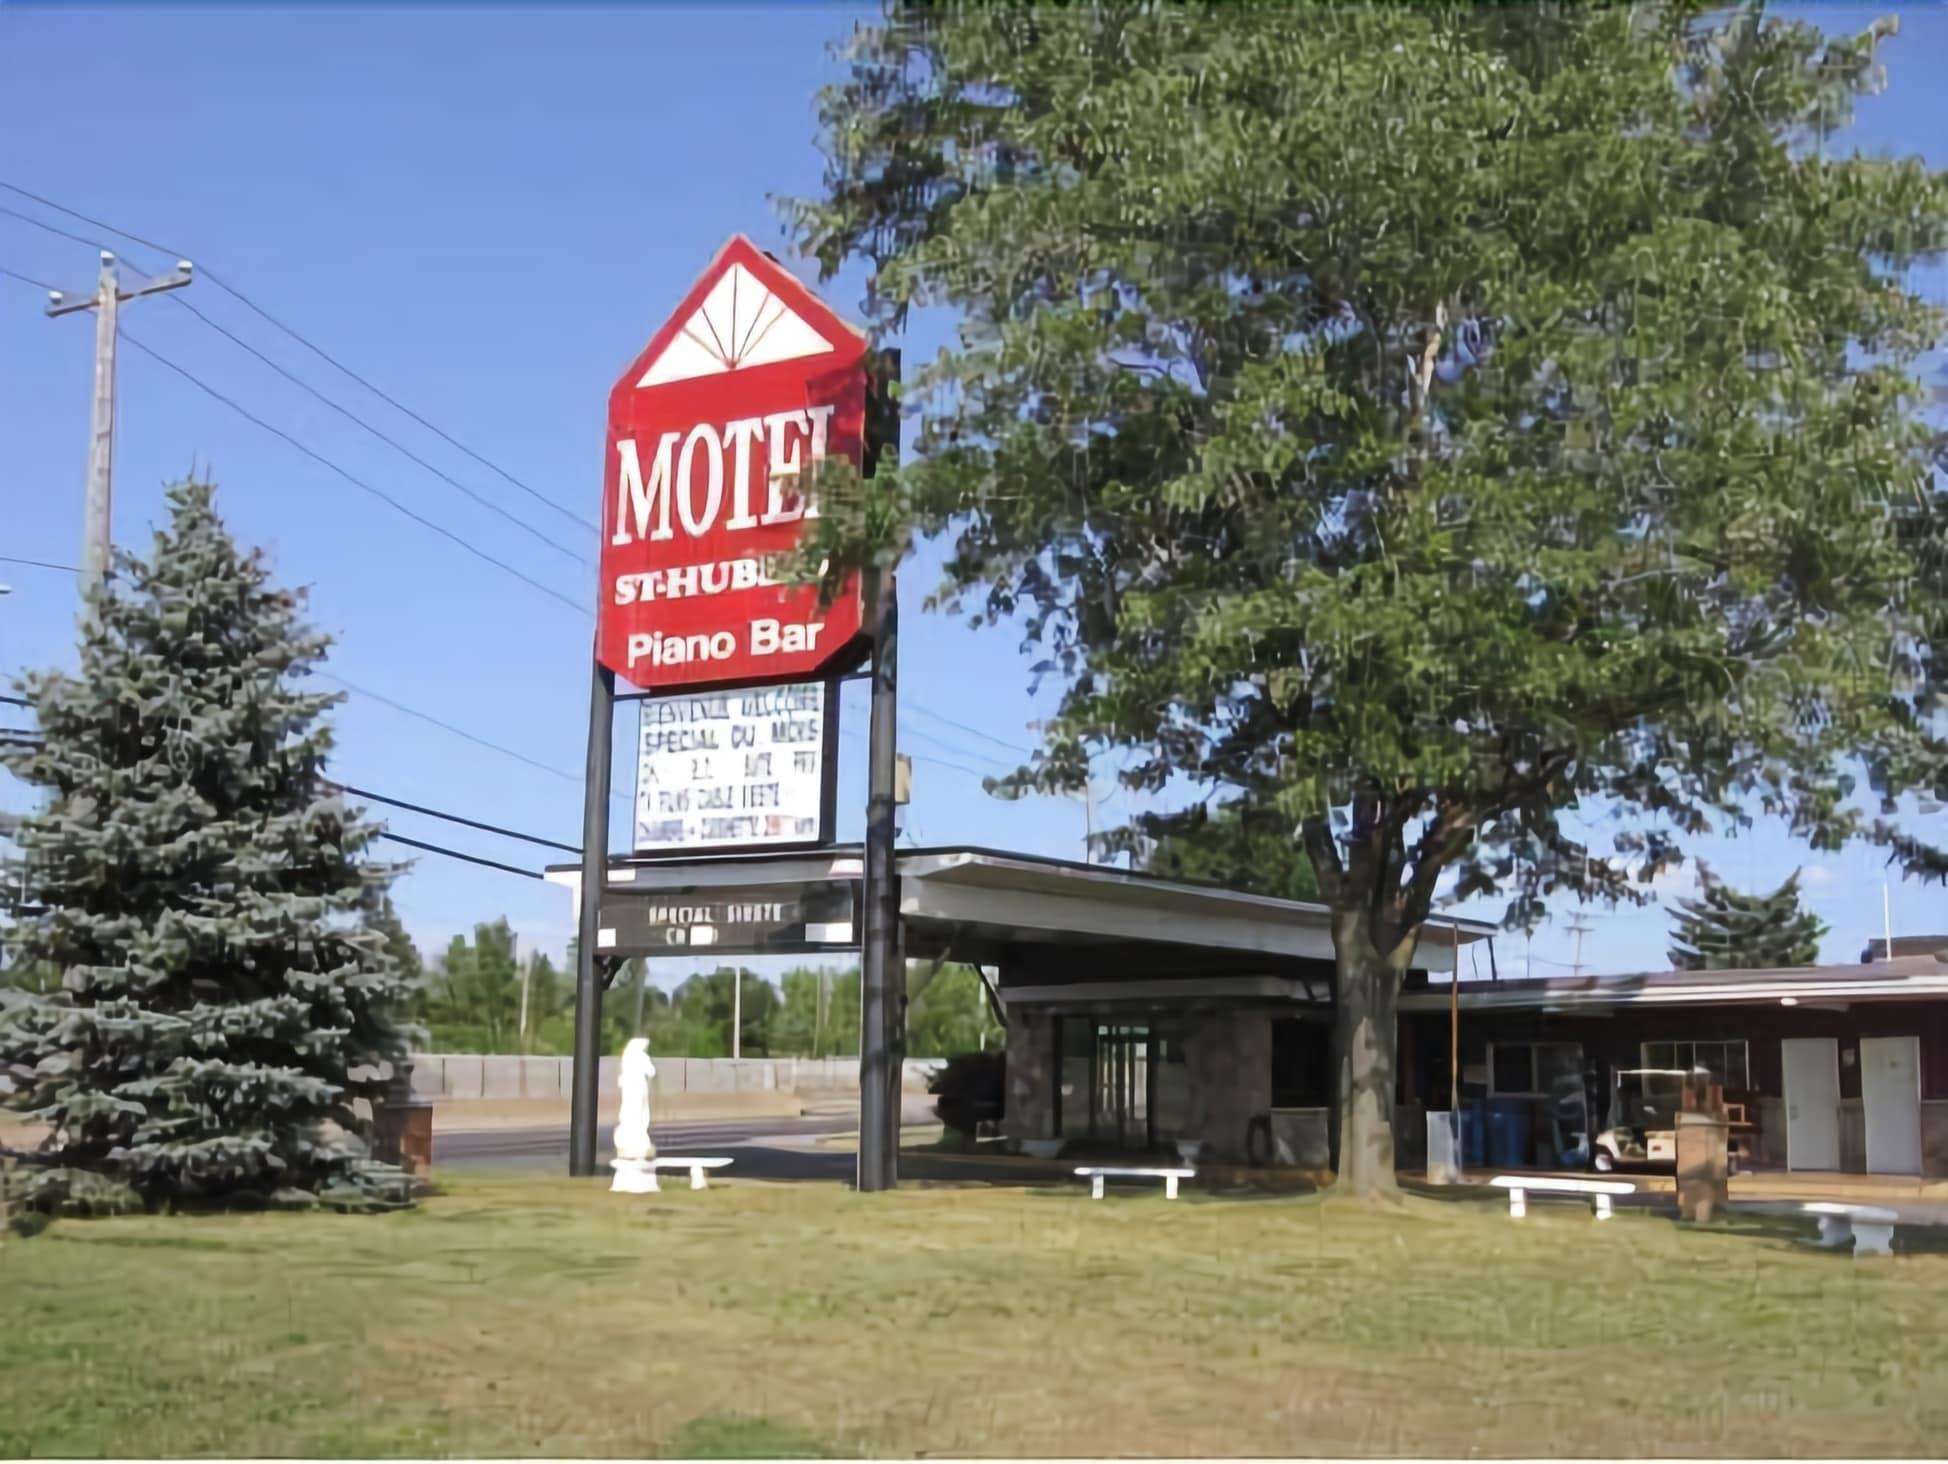 Motel Saint-Hubert image